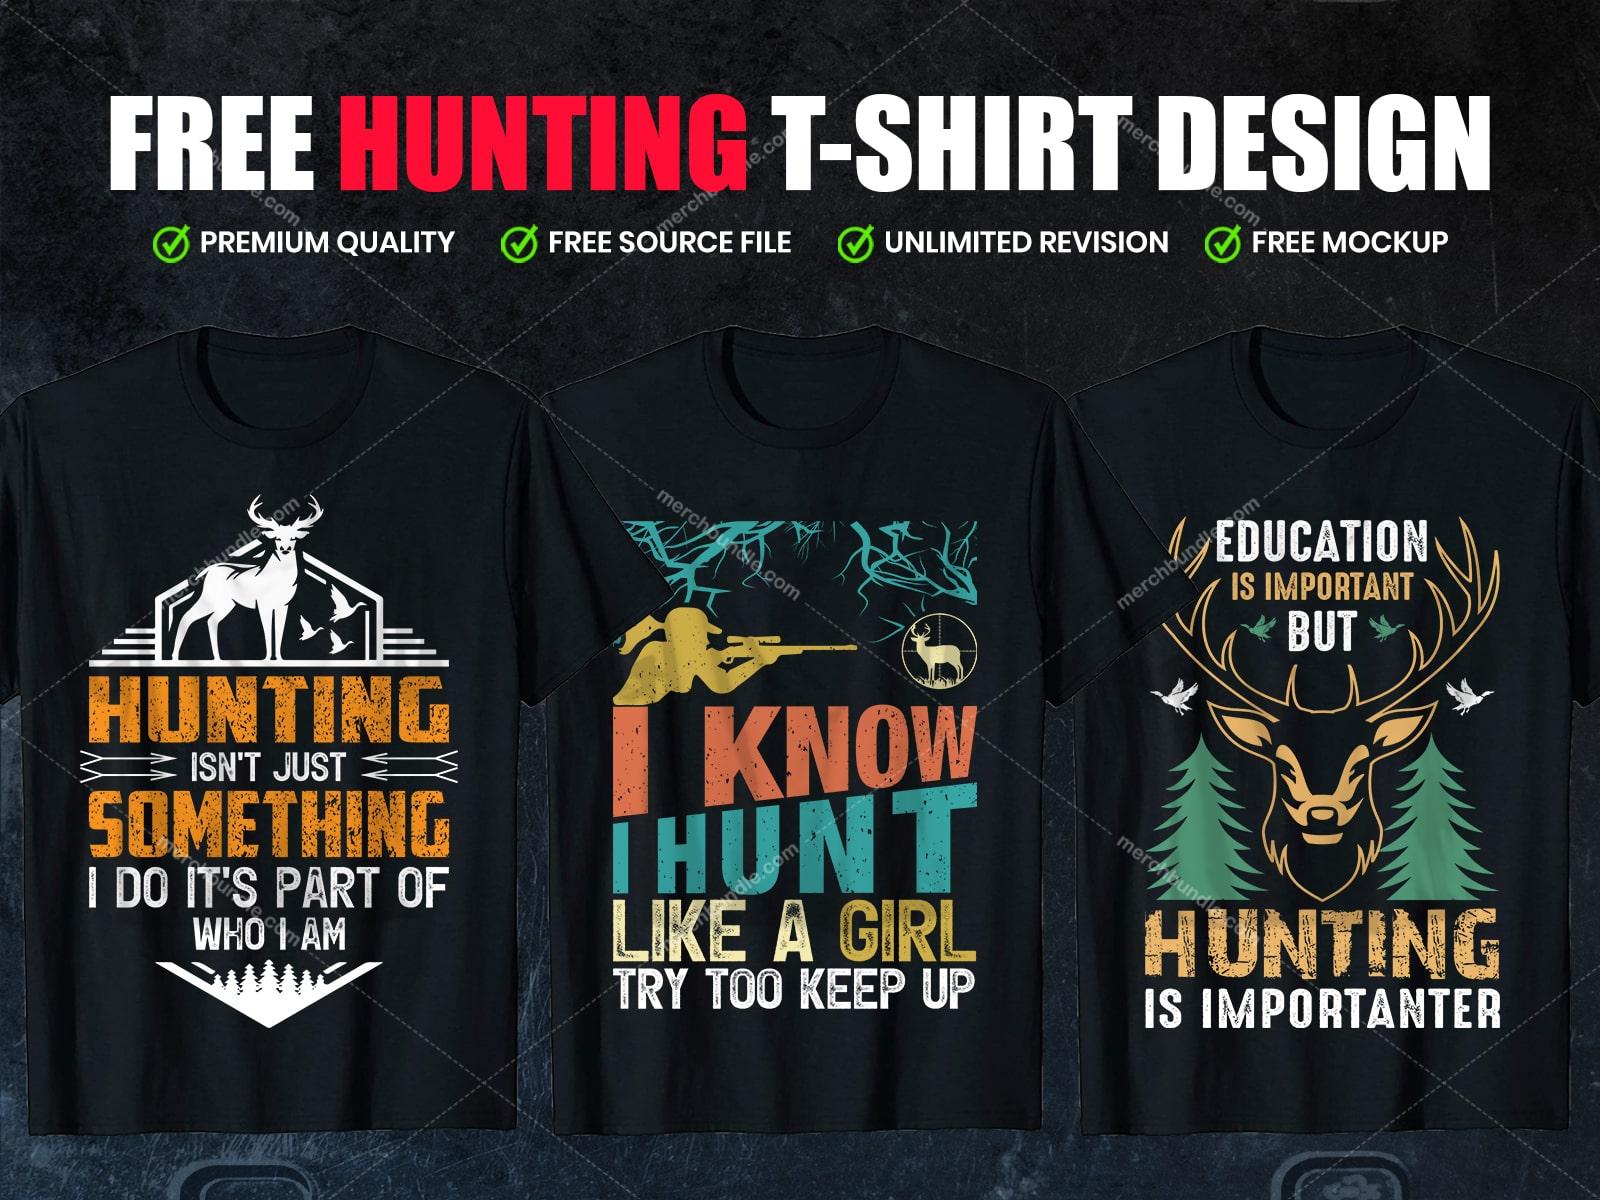 Free hunting t shirt design1